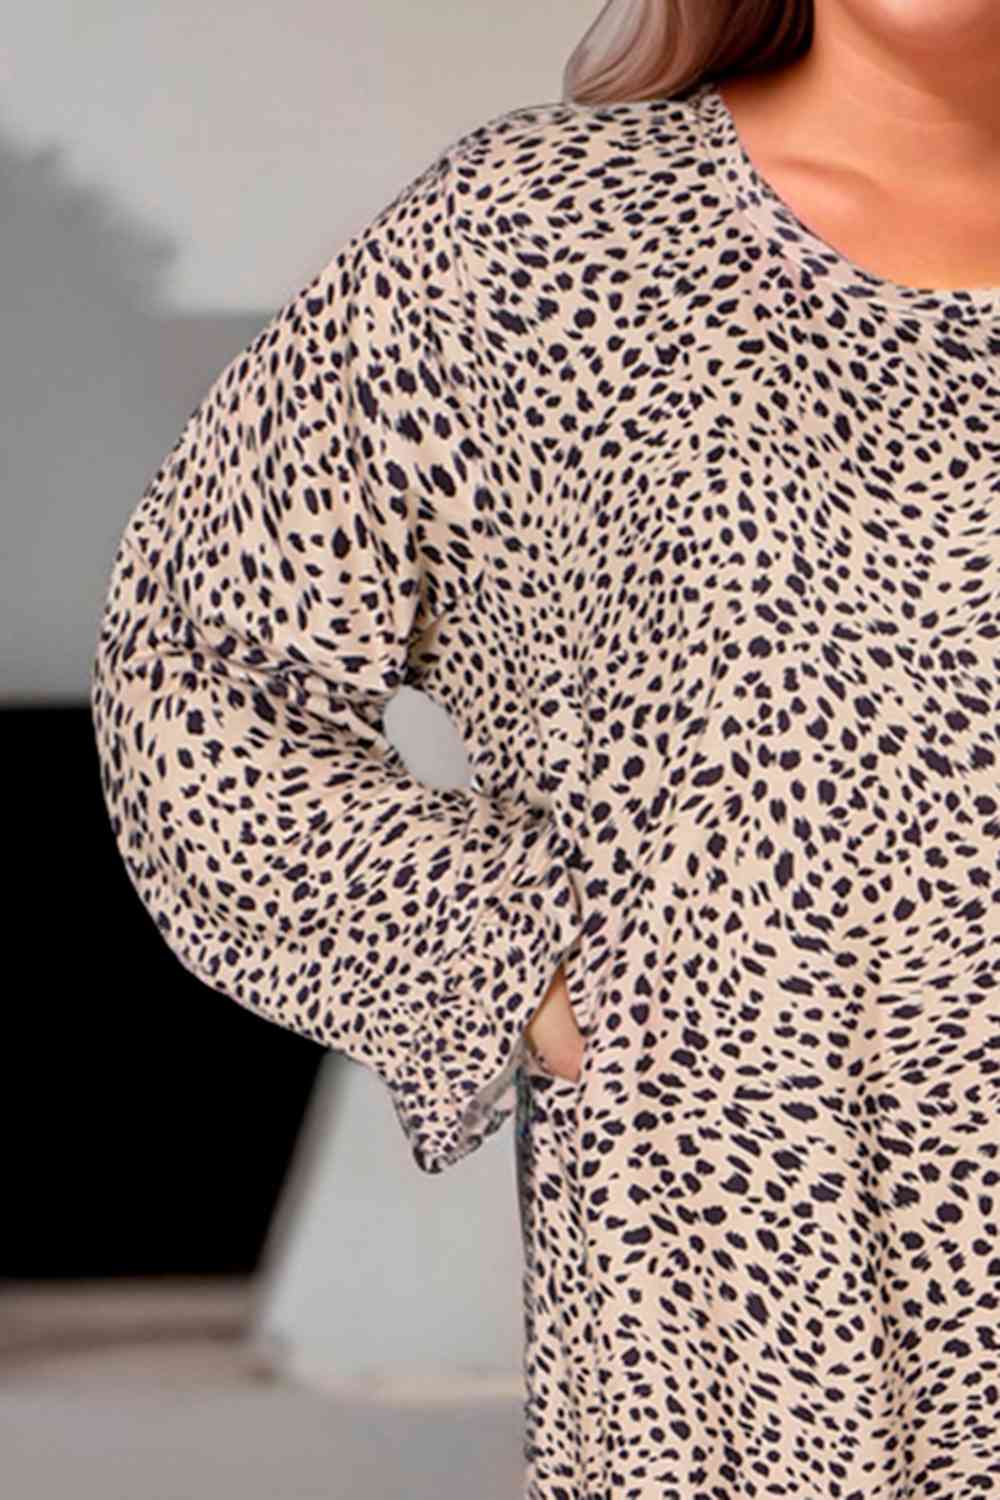 Plus Size Leopard Print Long Sleeve Mini Dress